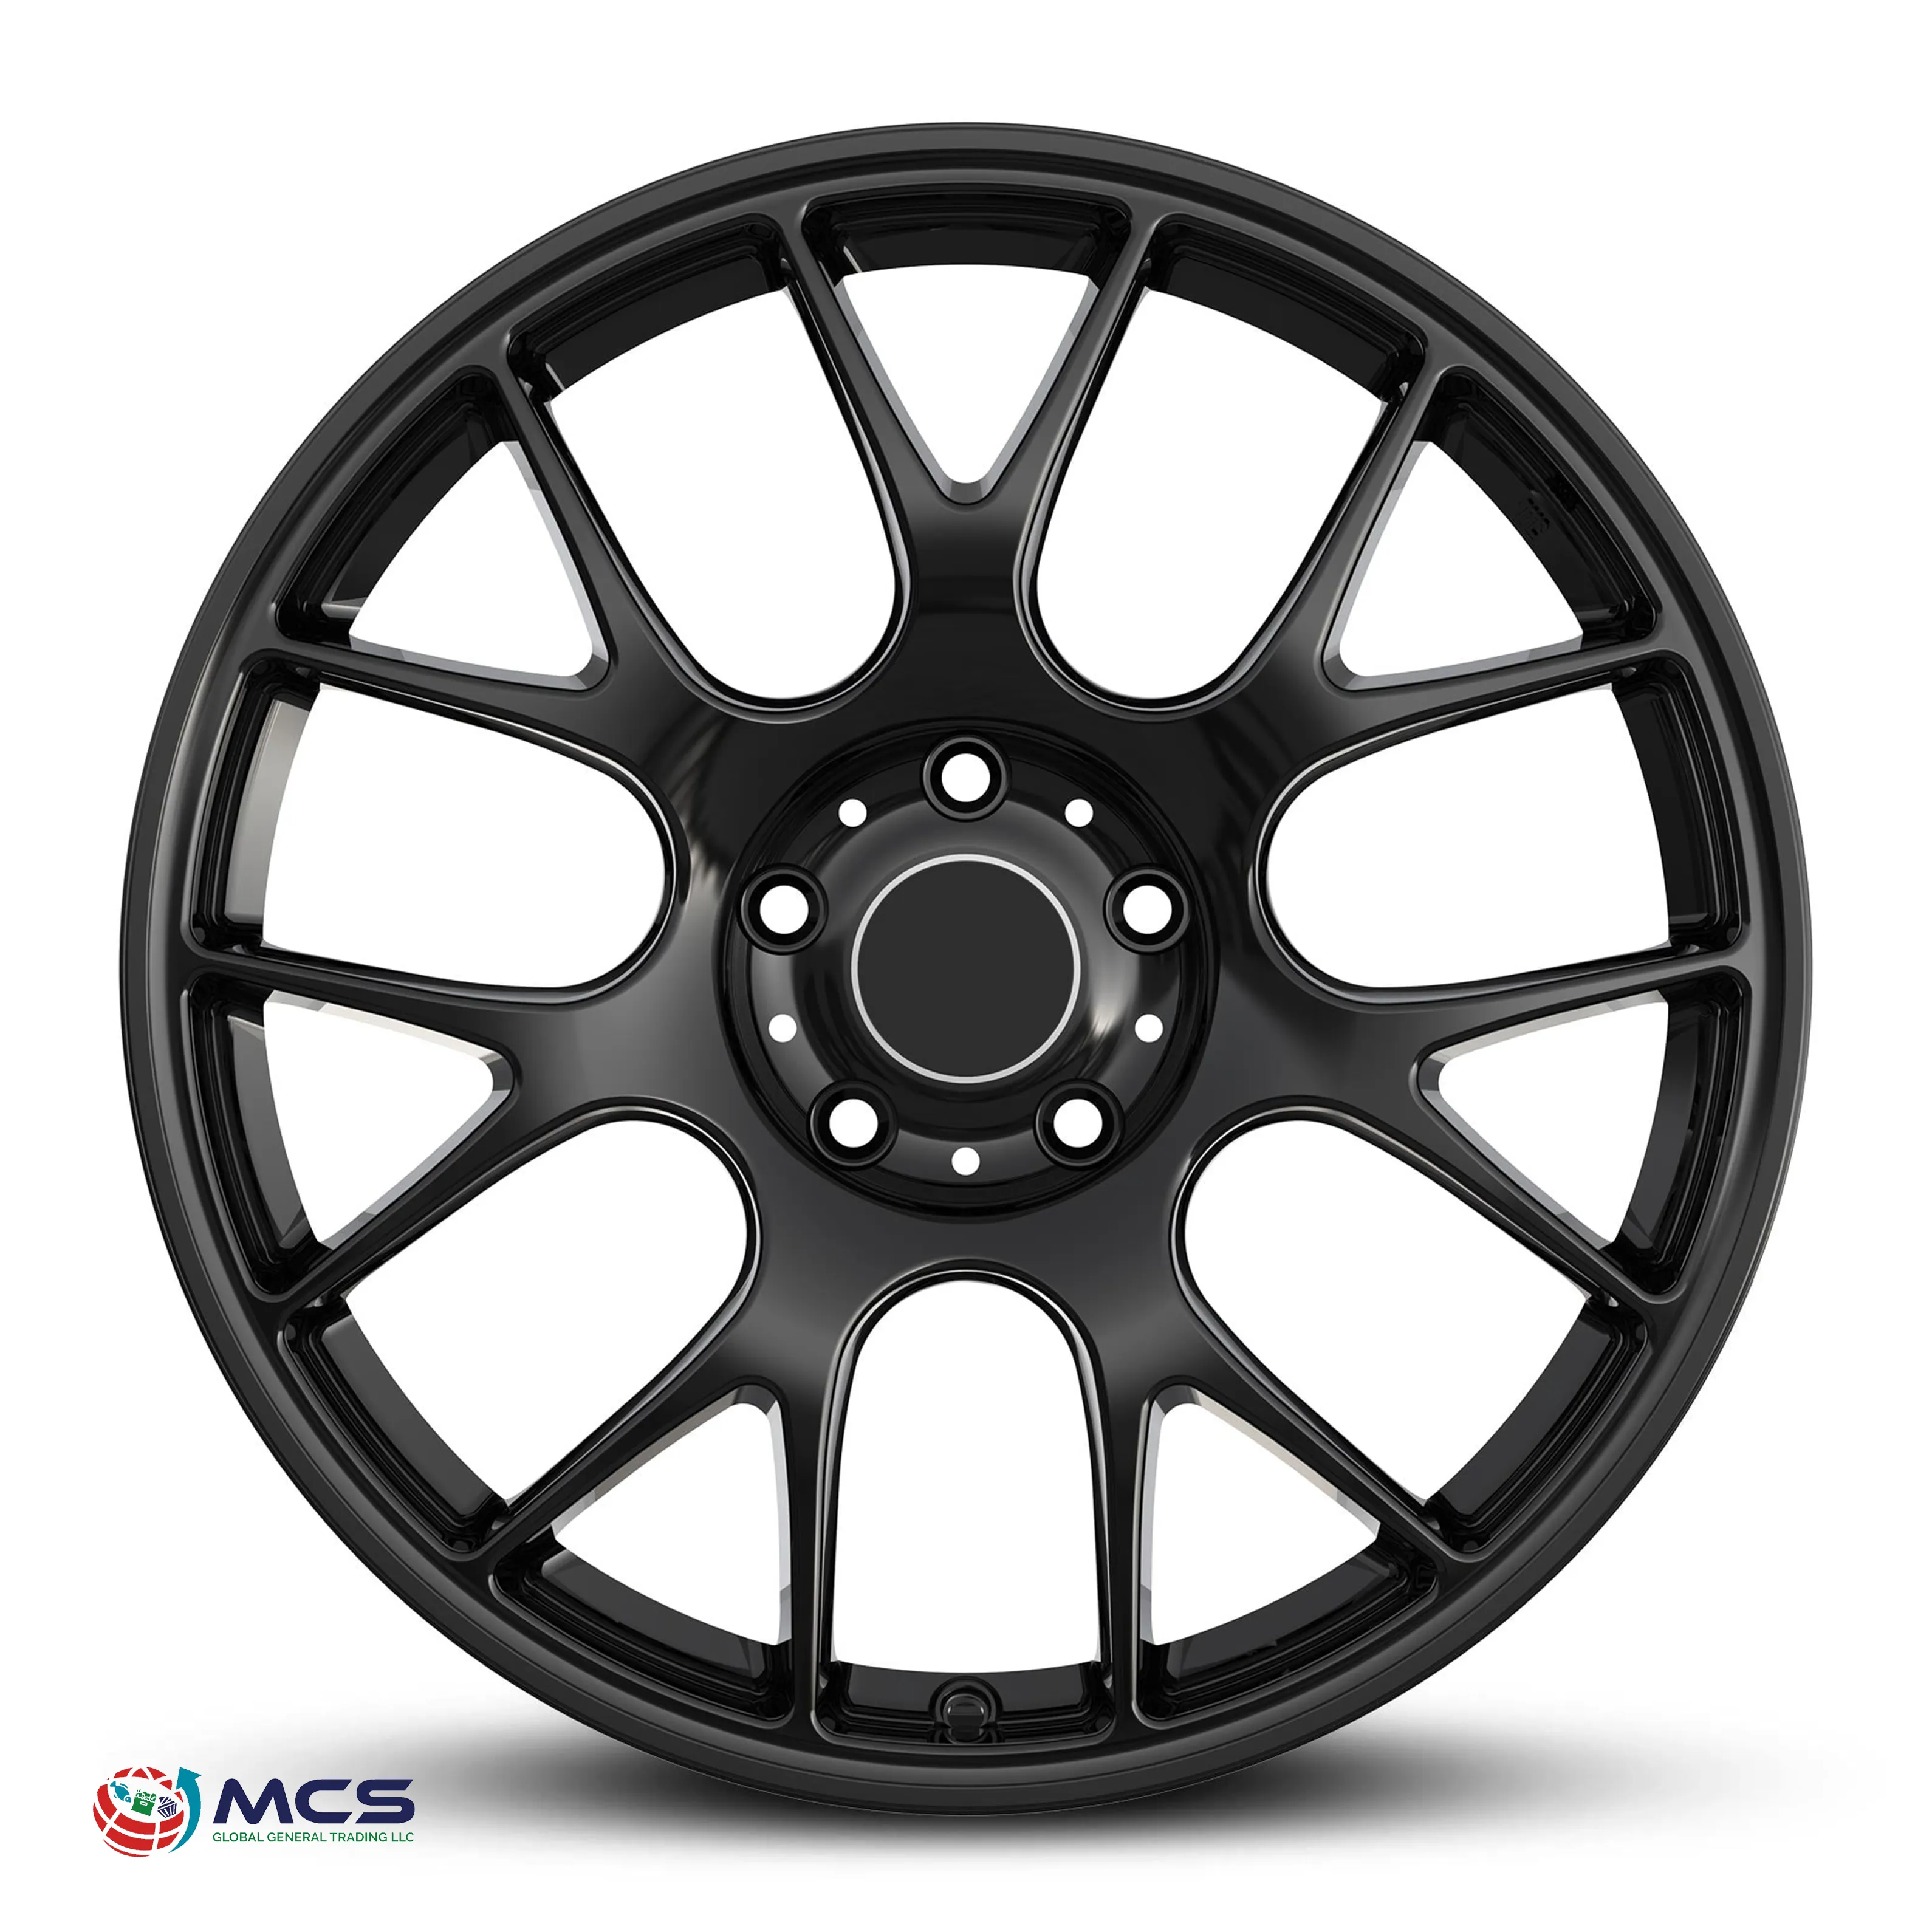 ट्रैक टायर 385.50r19. 5 16-19 ट्रैक टायर रिम्स मिश्र धातु एल्यूमीनियम रिम्स मल्टी स्पोट डिजाइन कास्टिंग या चुंबक मिश्र धातु पहियों